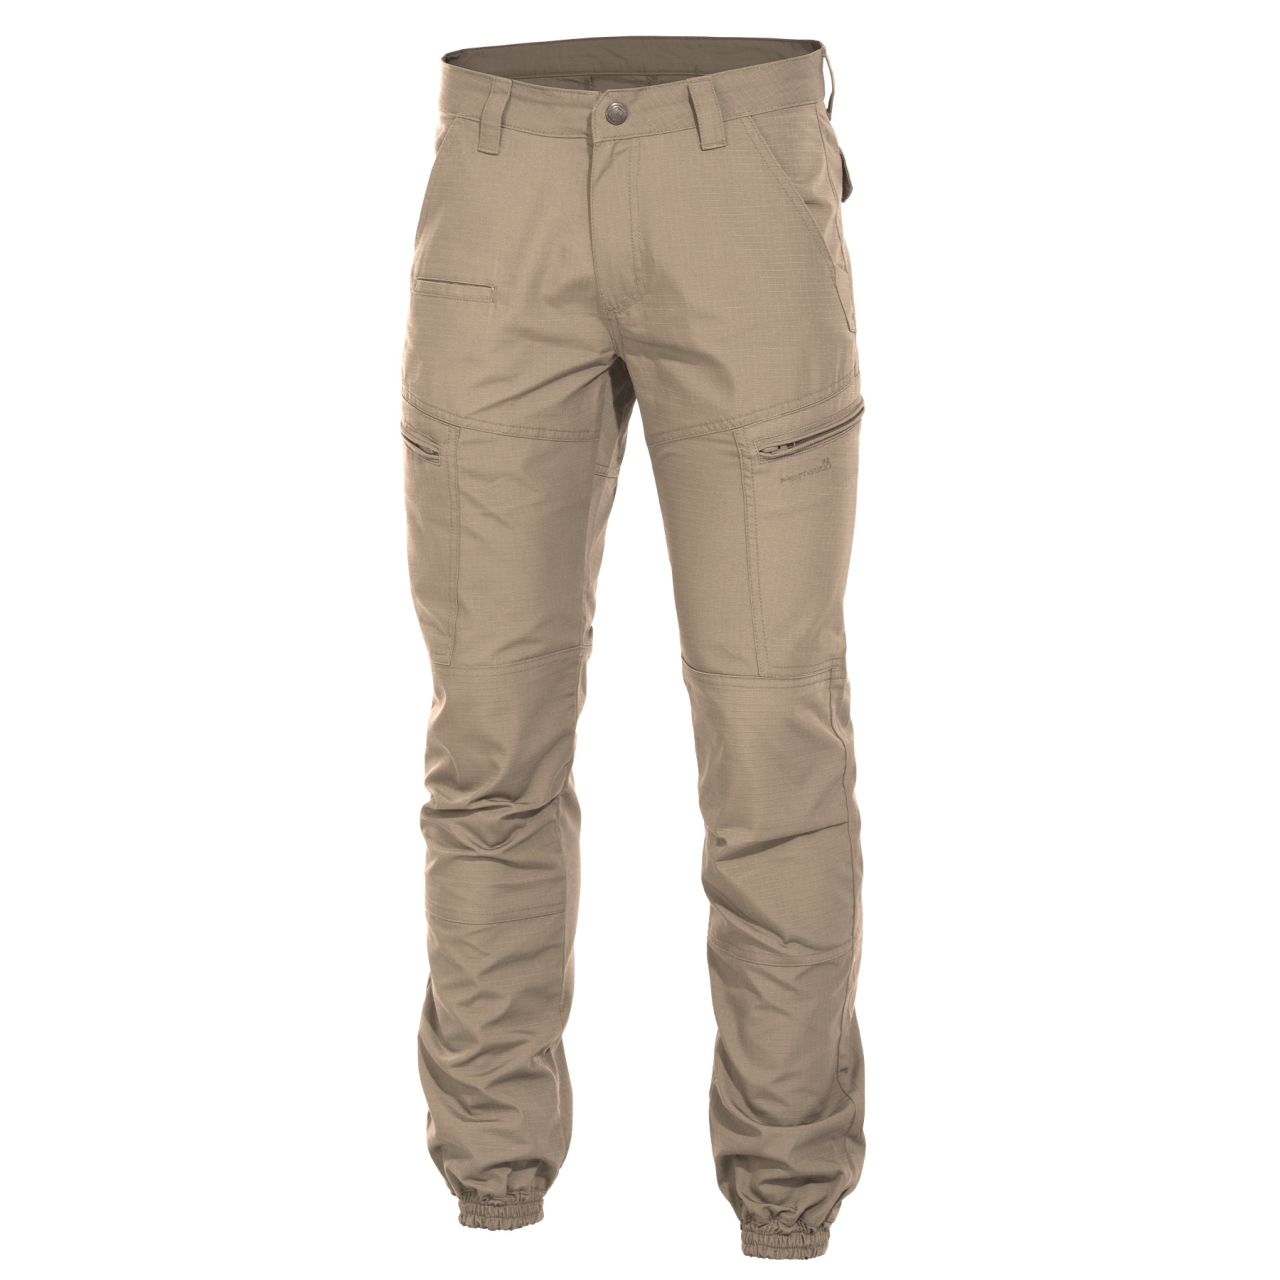 Kalhoty Pentagon Ypero - béžové, 50 L